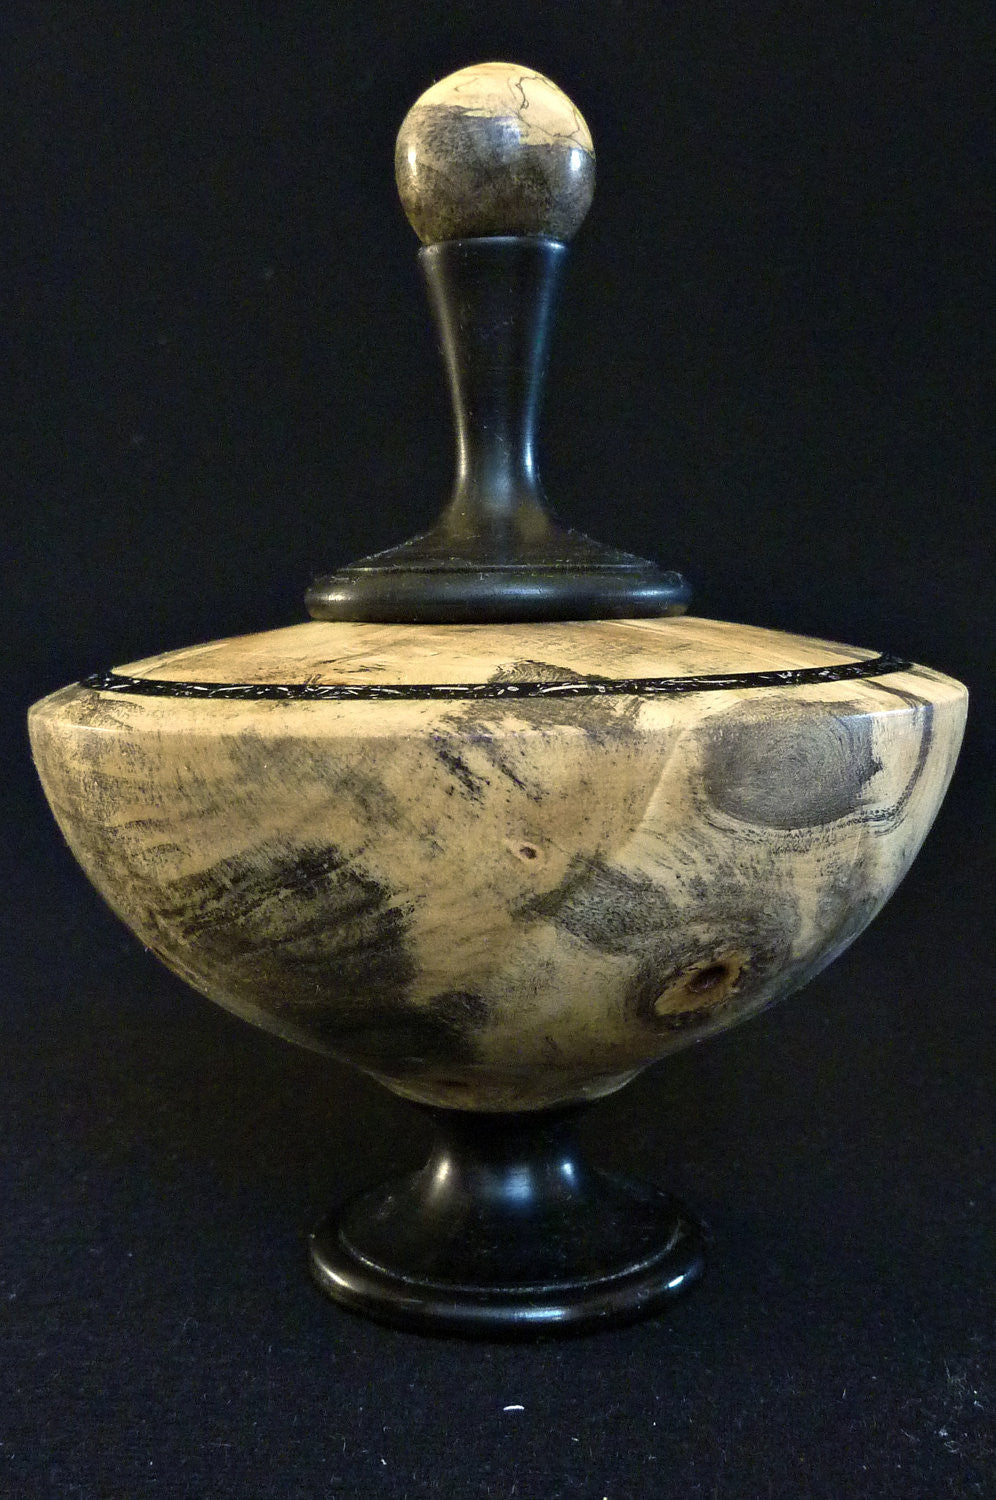 LV-324  Buckeye Burl & Indian Ebony Wood Turned Lidded Vase, Hollow Form, Wood Urn--RARE BEAUTY